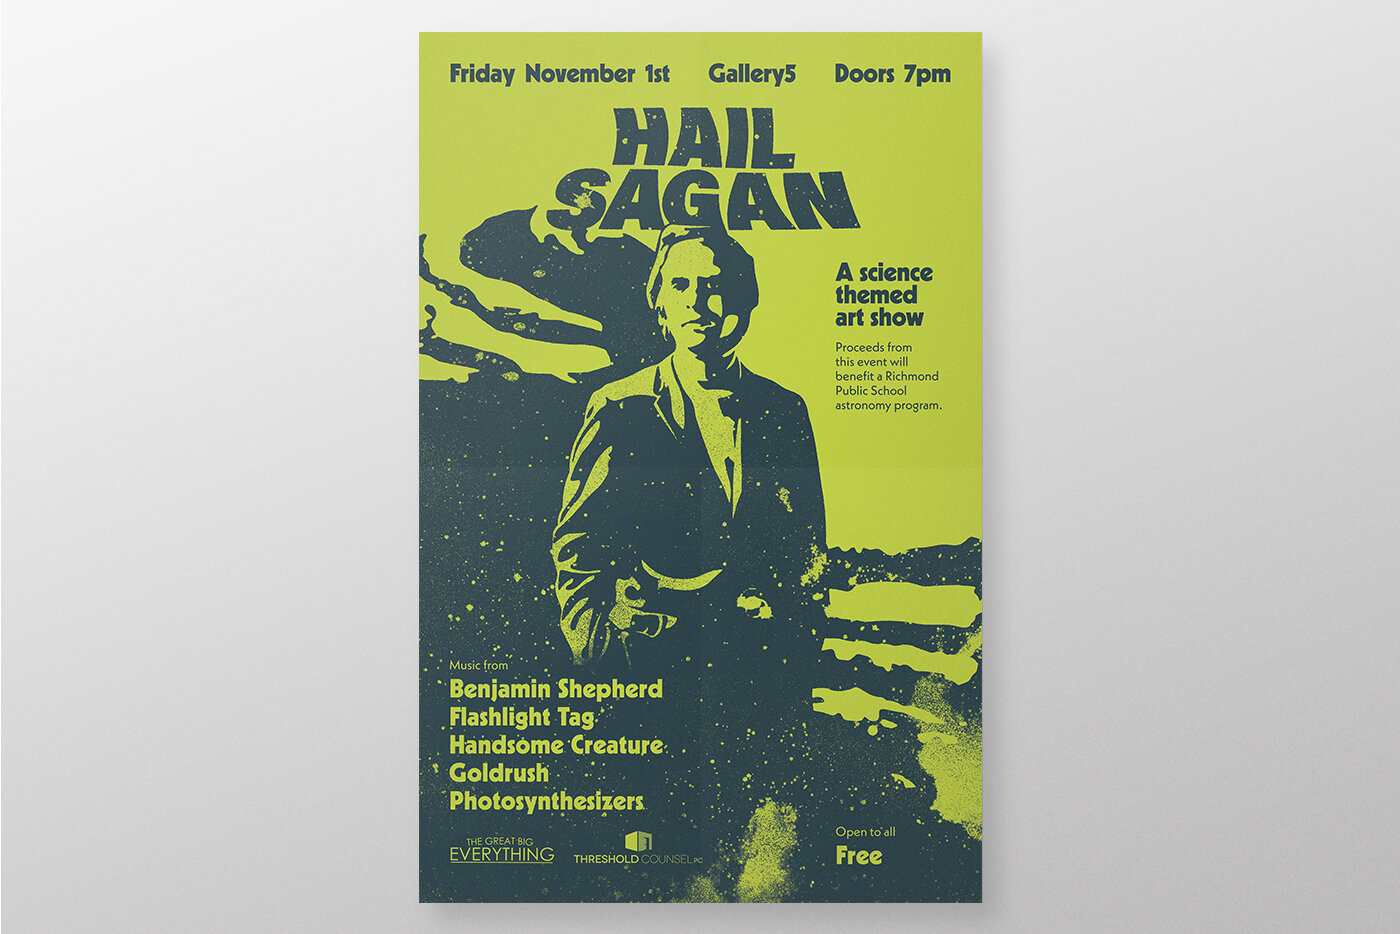 Hail Sagan Gallery5 First Friday Poster